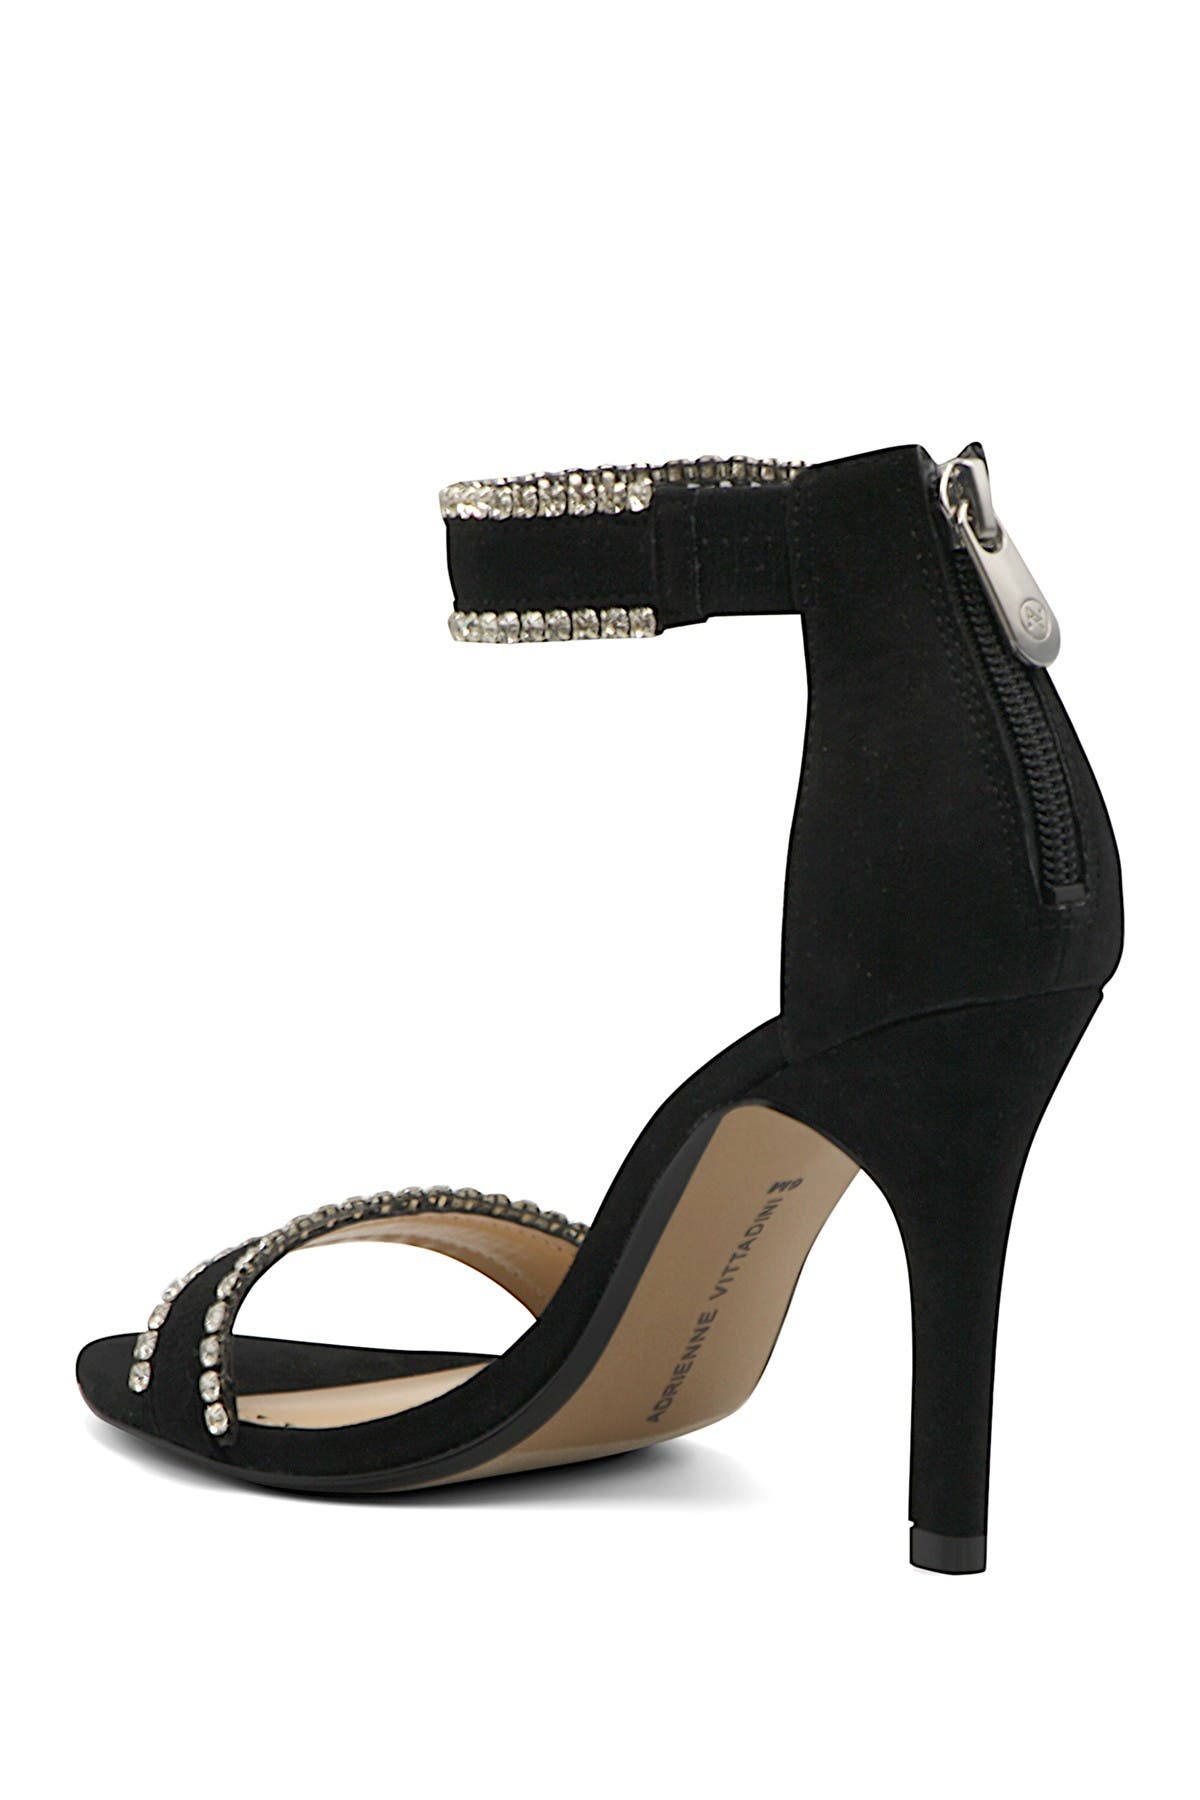 Adrienne Vittadini Gracy Suede Embellished Stiletto Sandal In Black